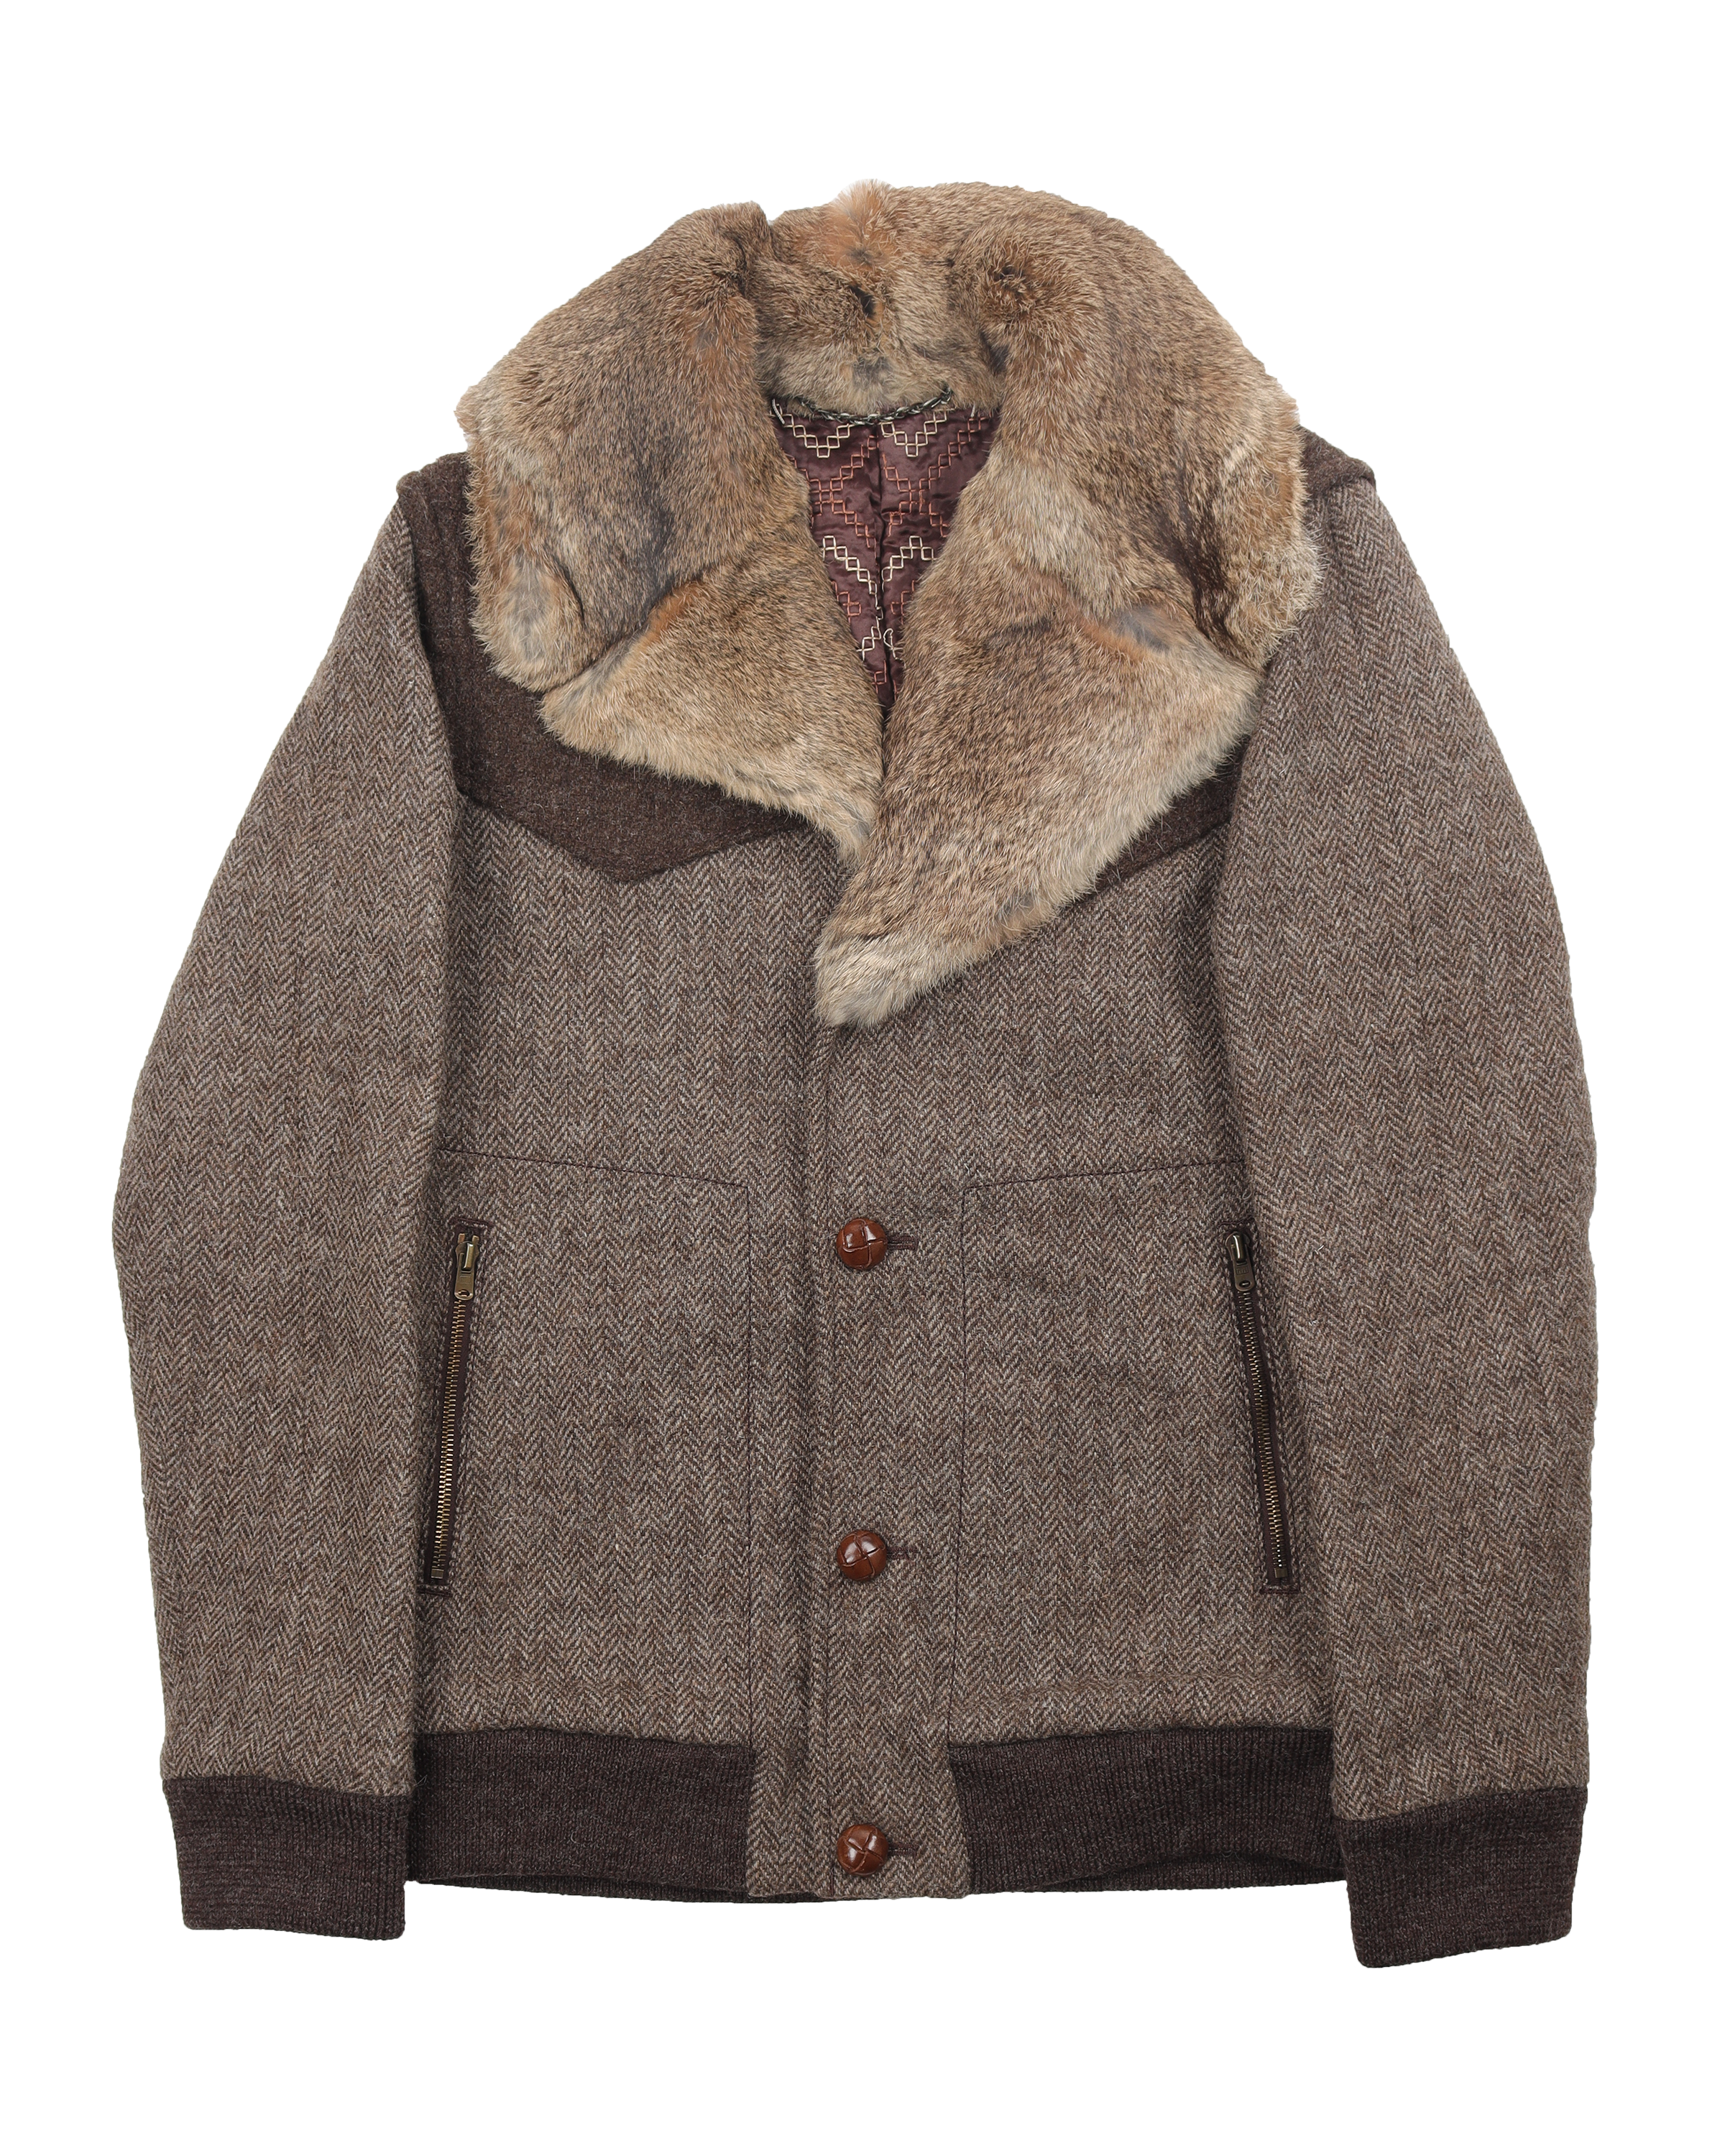 Fur Collar Wool Jacket 2002 "Nowhere Man Collection"